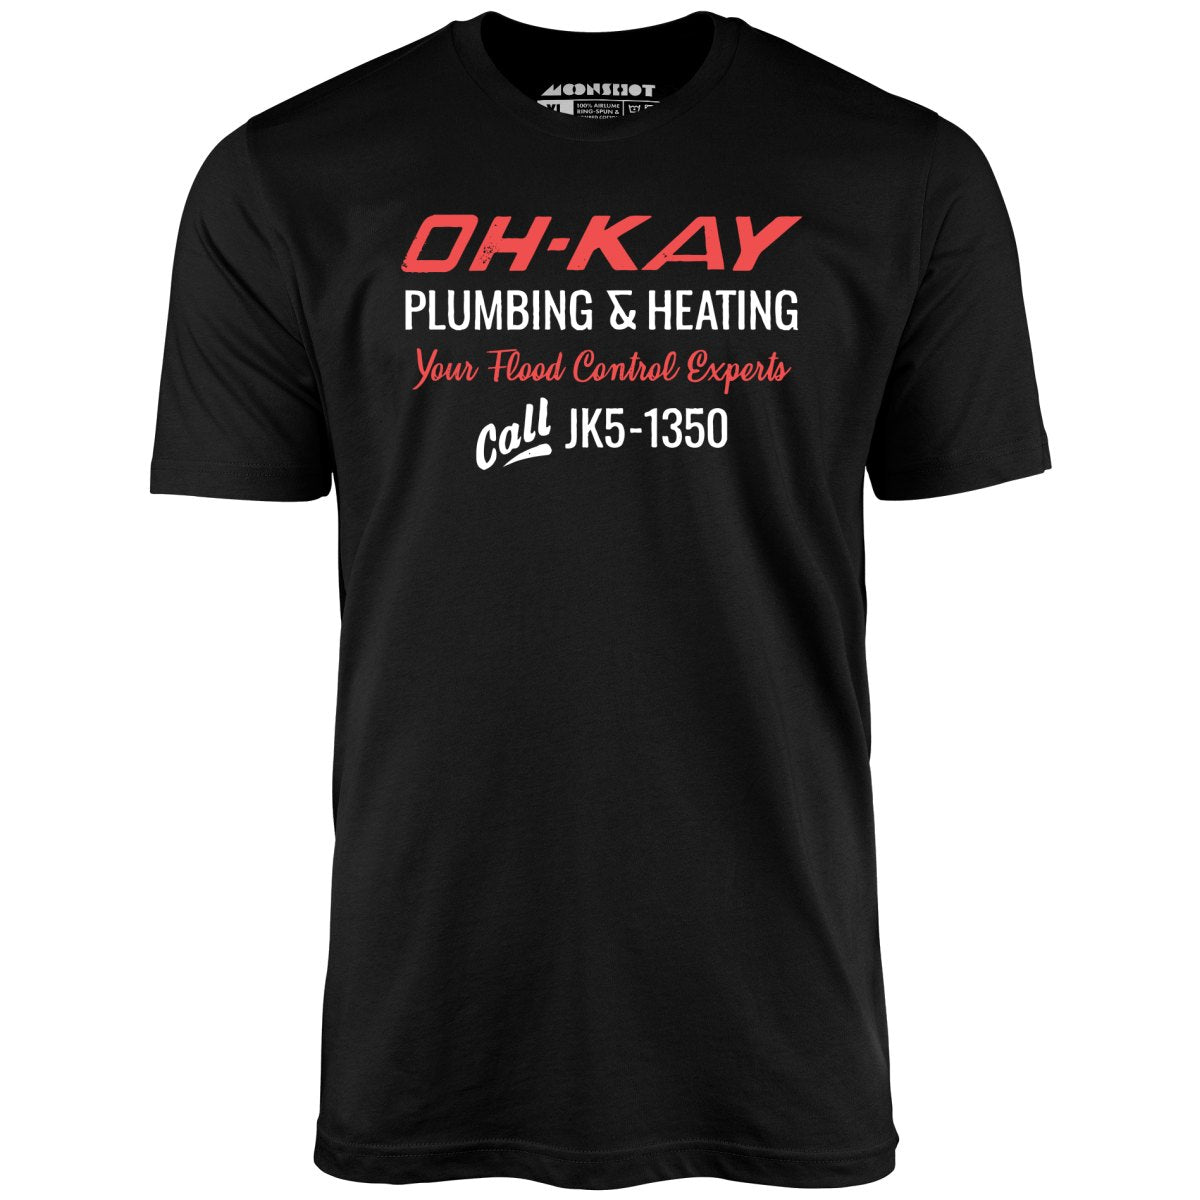 Oh-Kay Plumbing & Heating - Unisex T-Shirt